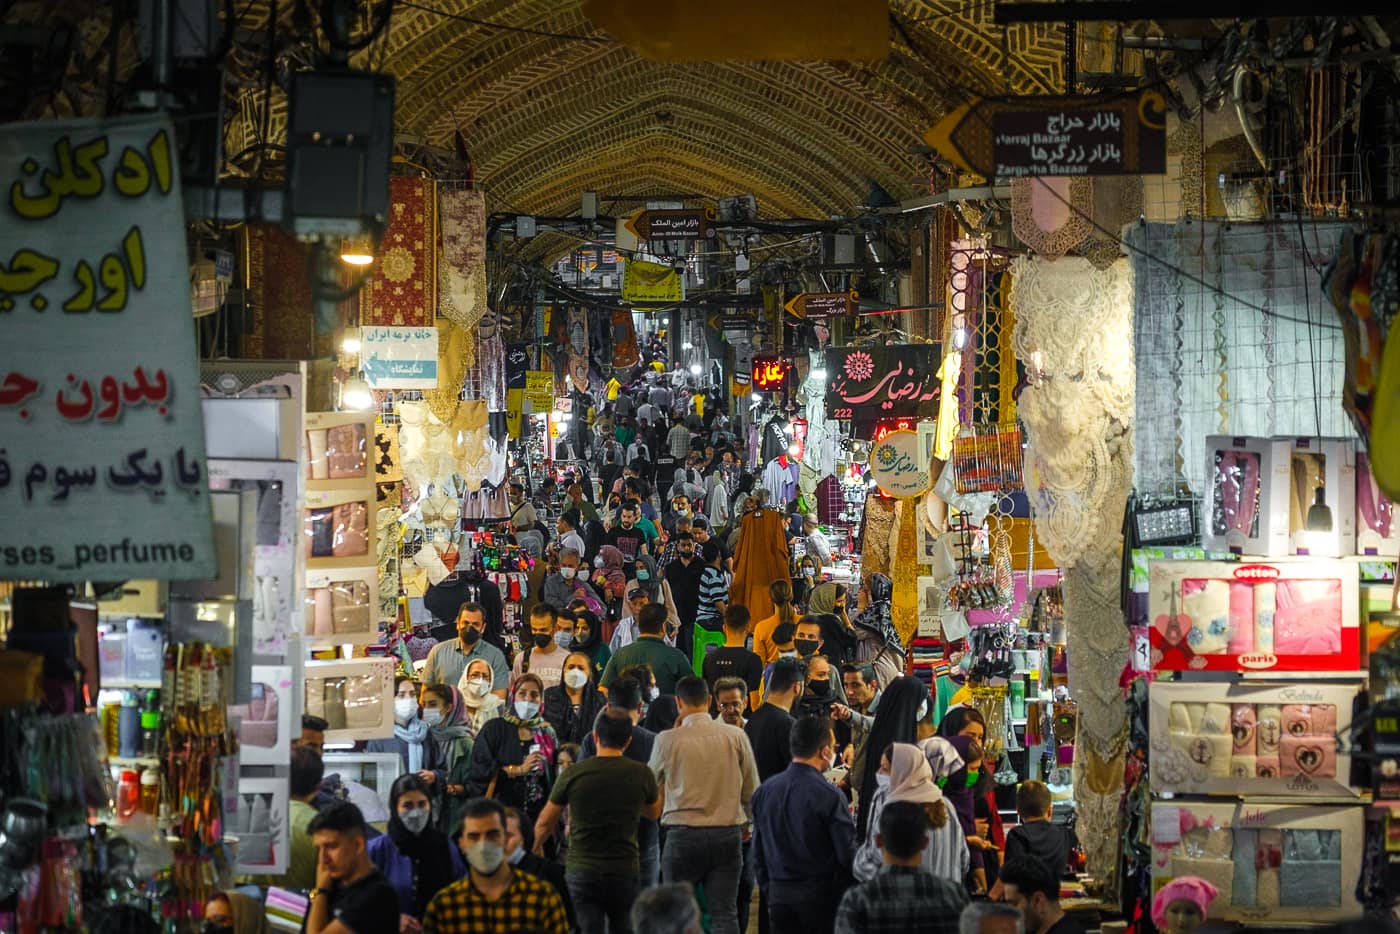 view of people in market in tehran